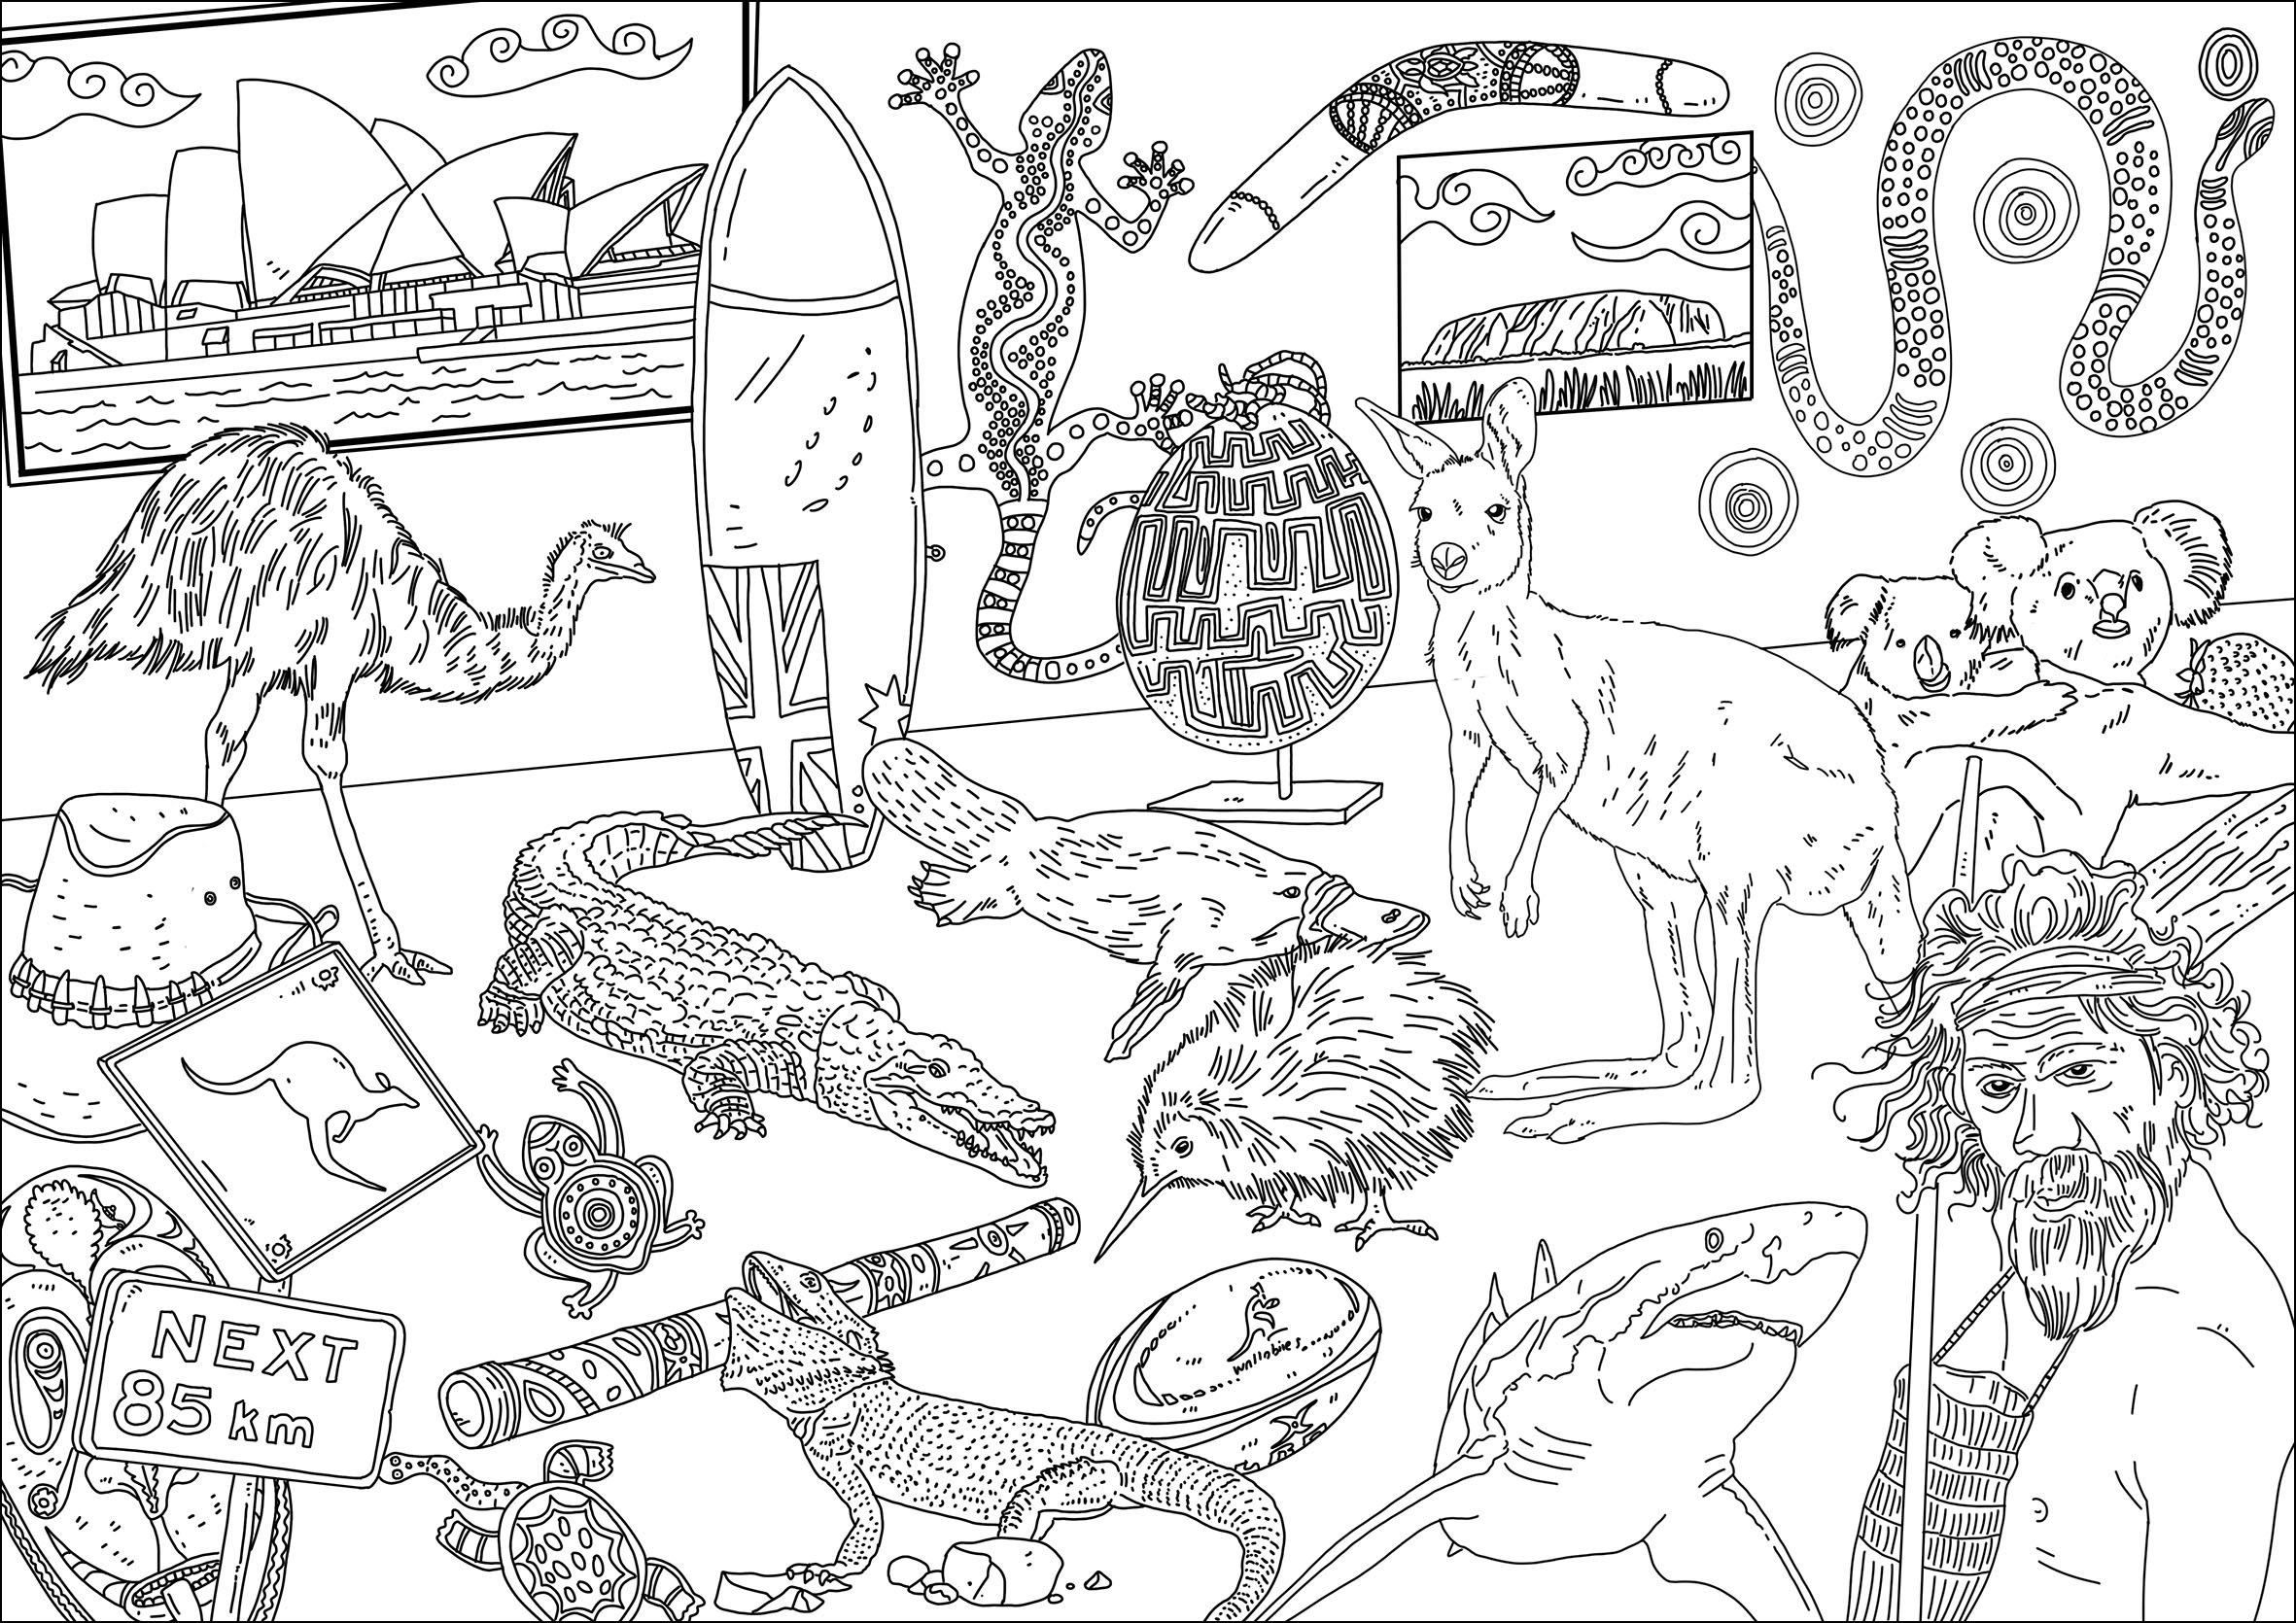 Different animals and symbols of Australia, Artist : Frédéric Brogard